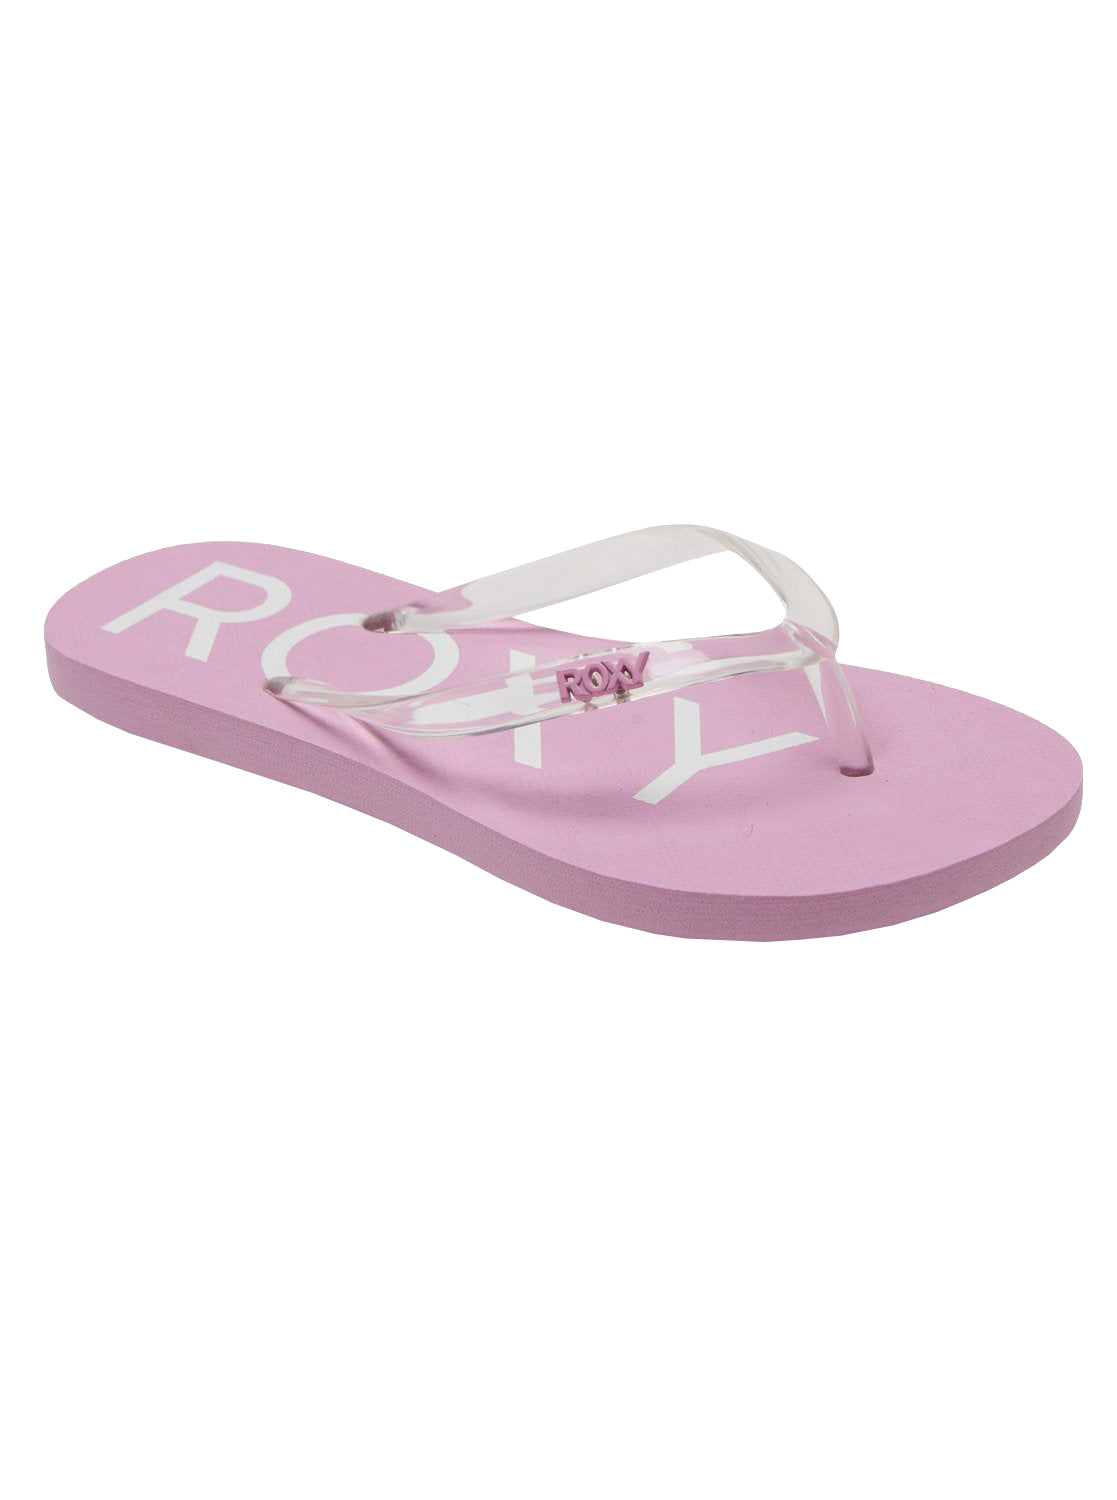 Roxy Viva Jelly Girls Sandal LRS-Lilac Rose 3 Y